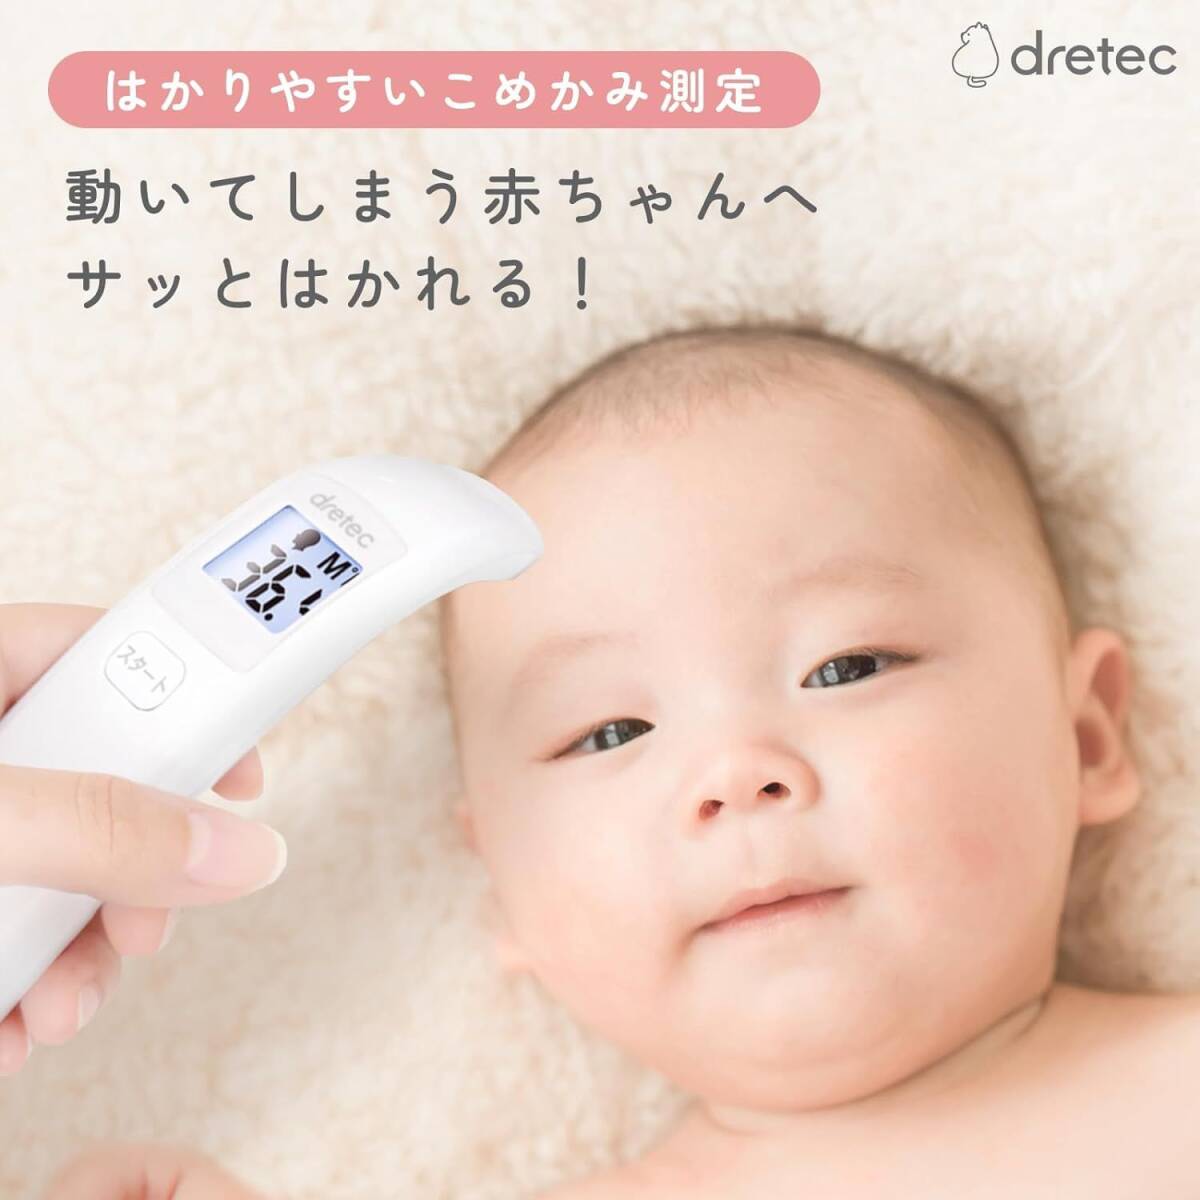 dretec(ドリテック) 非接触体温計 医療機器認証取得 日本メーカー 体温計 赤ちゃん 非接触 1秒測定・ 使用環境温度10〜40℃ TO-401_画像8